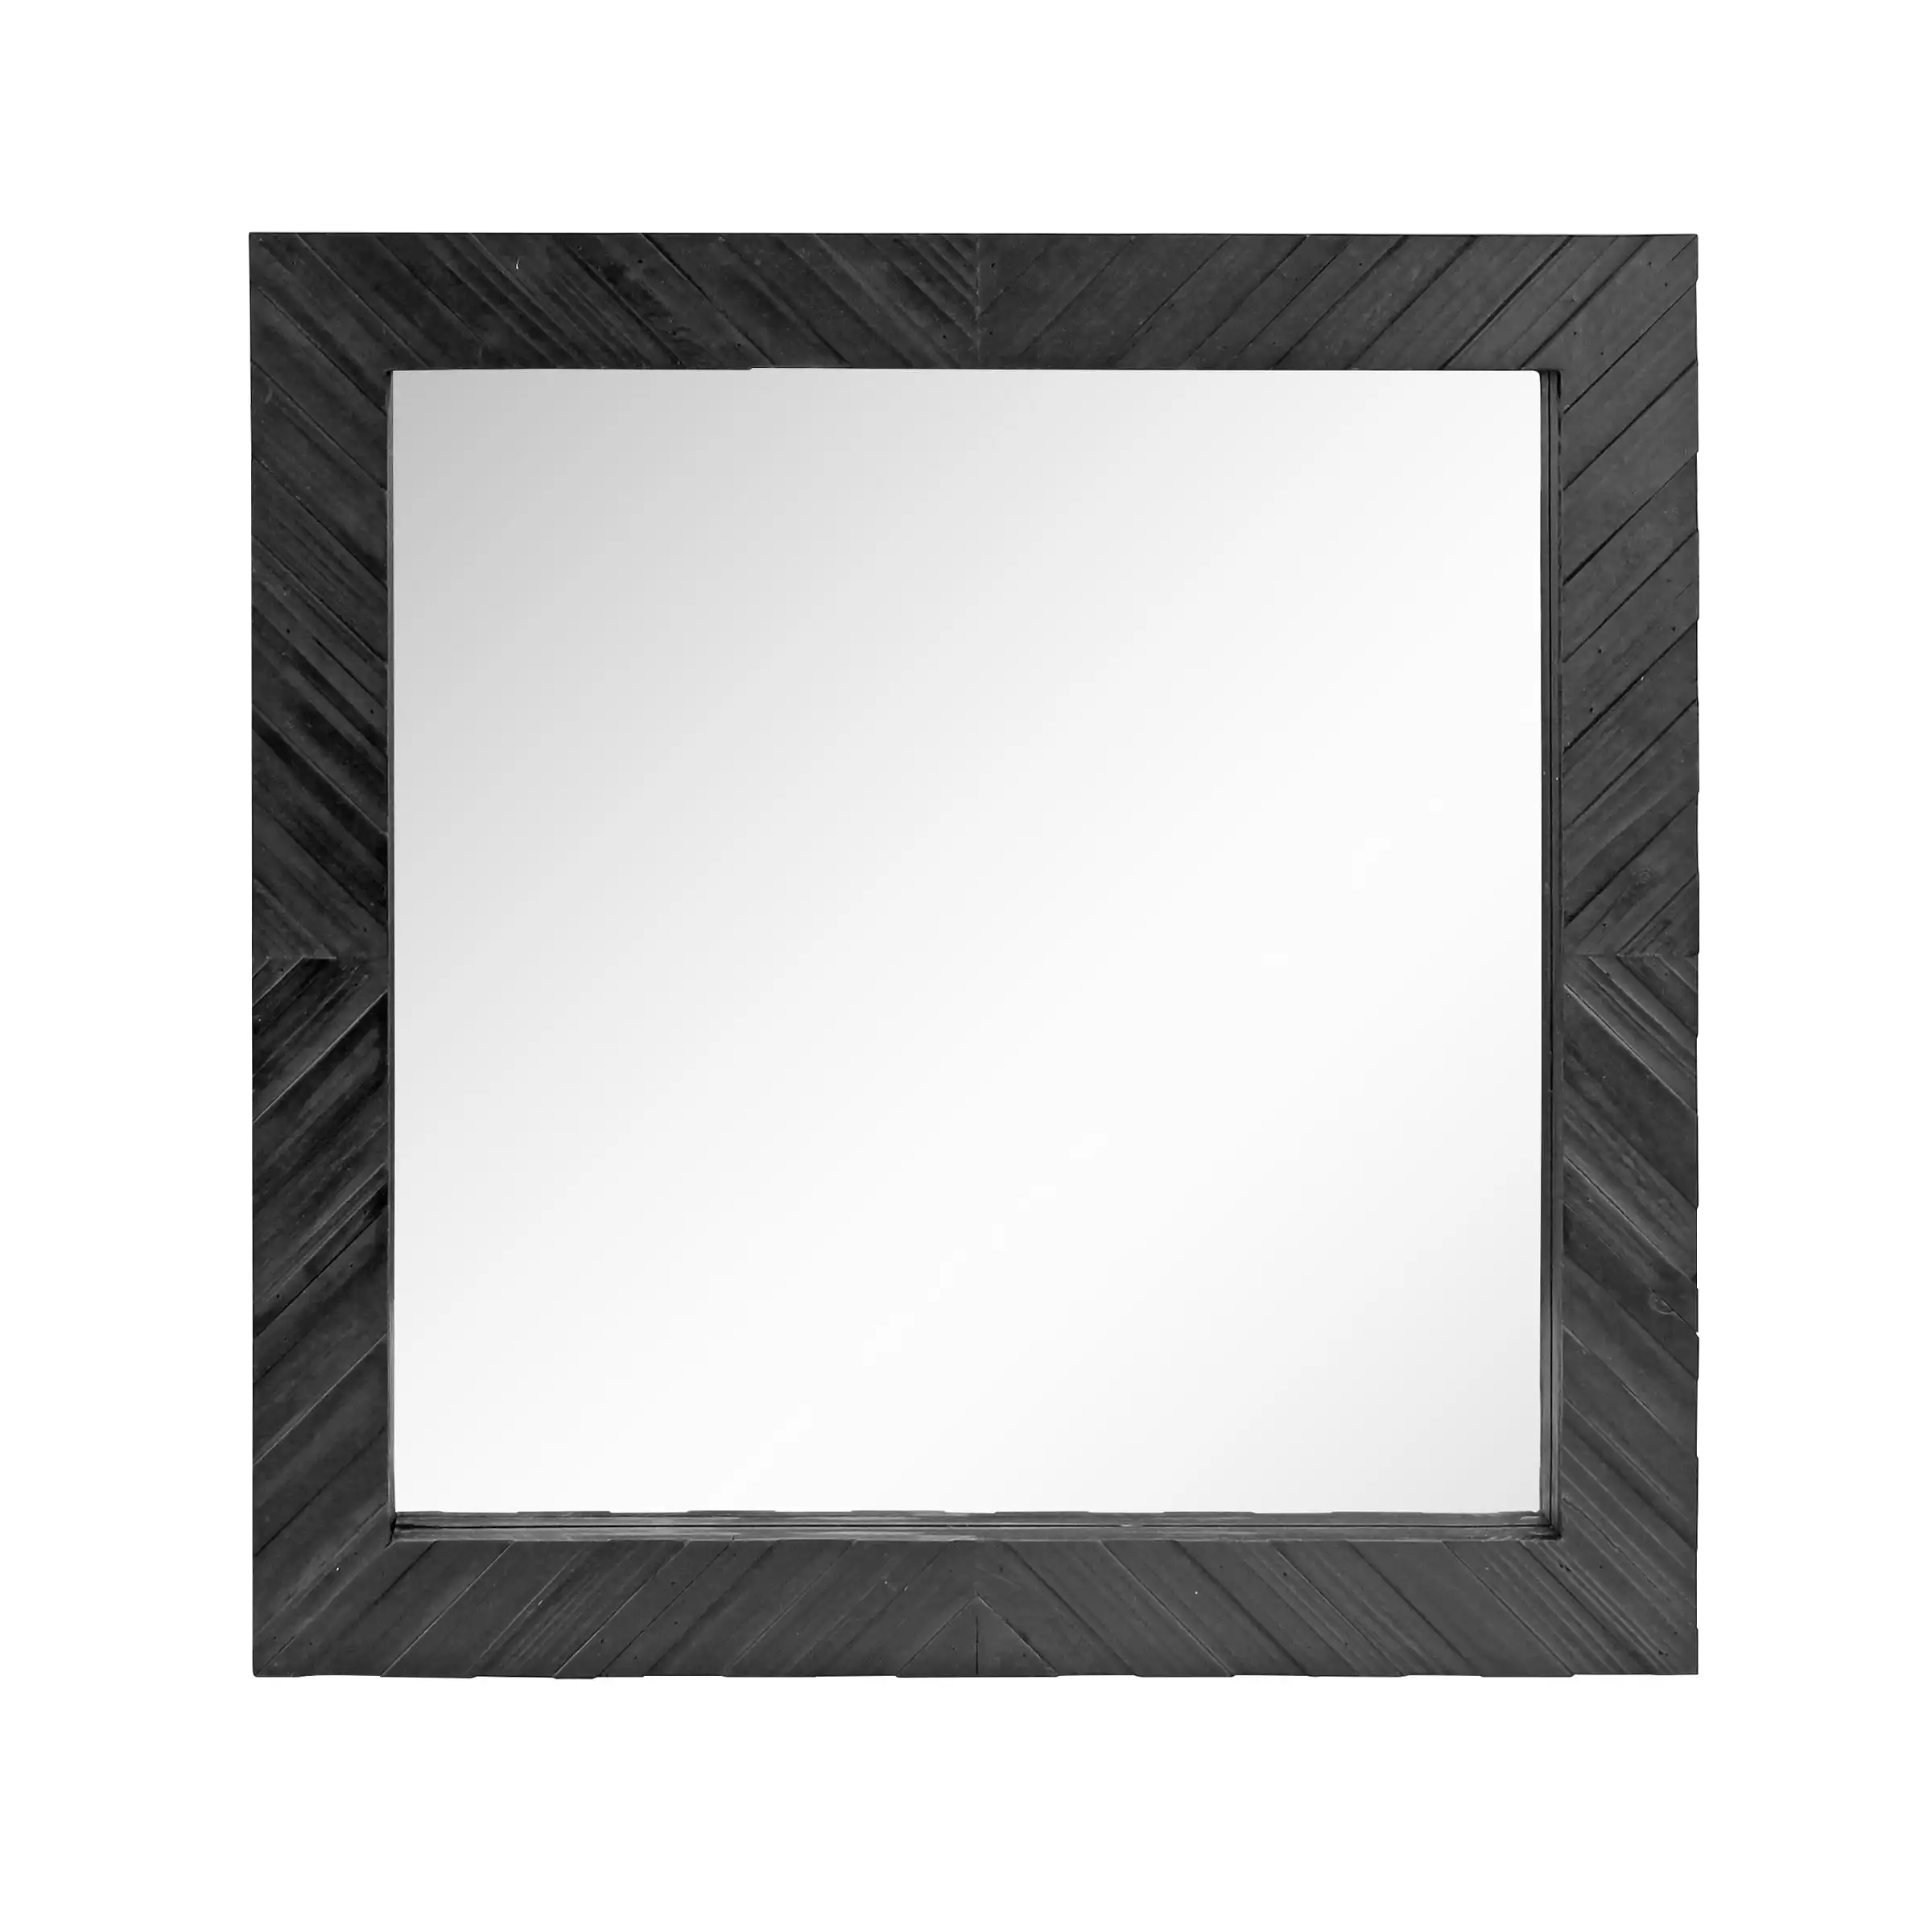 

20" x 20" Black Modern Square Wood Chevron Wall Mirror